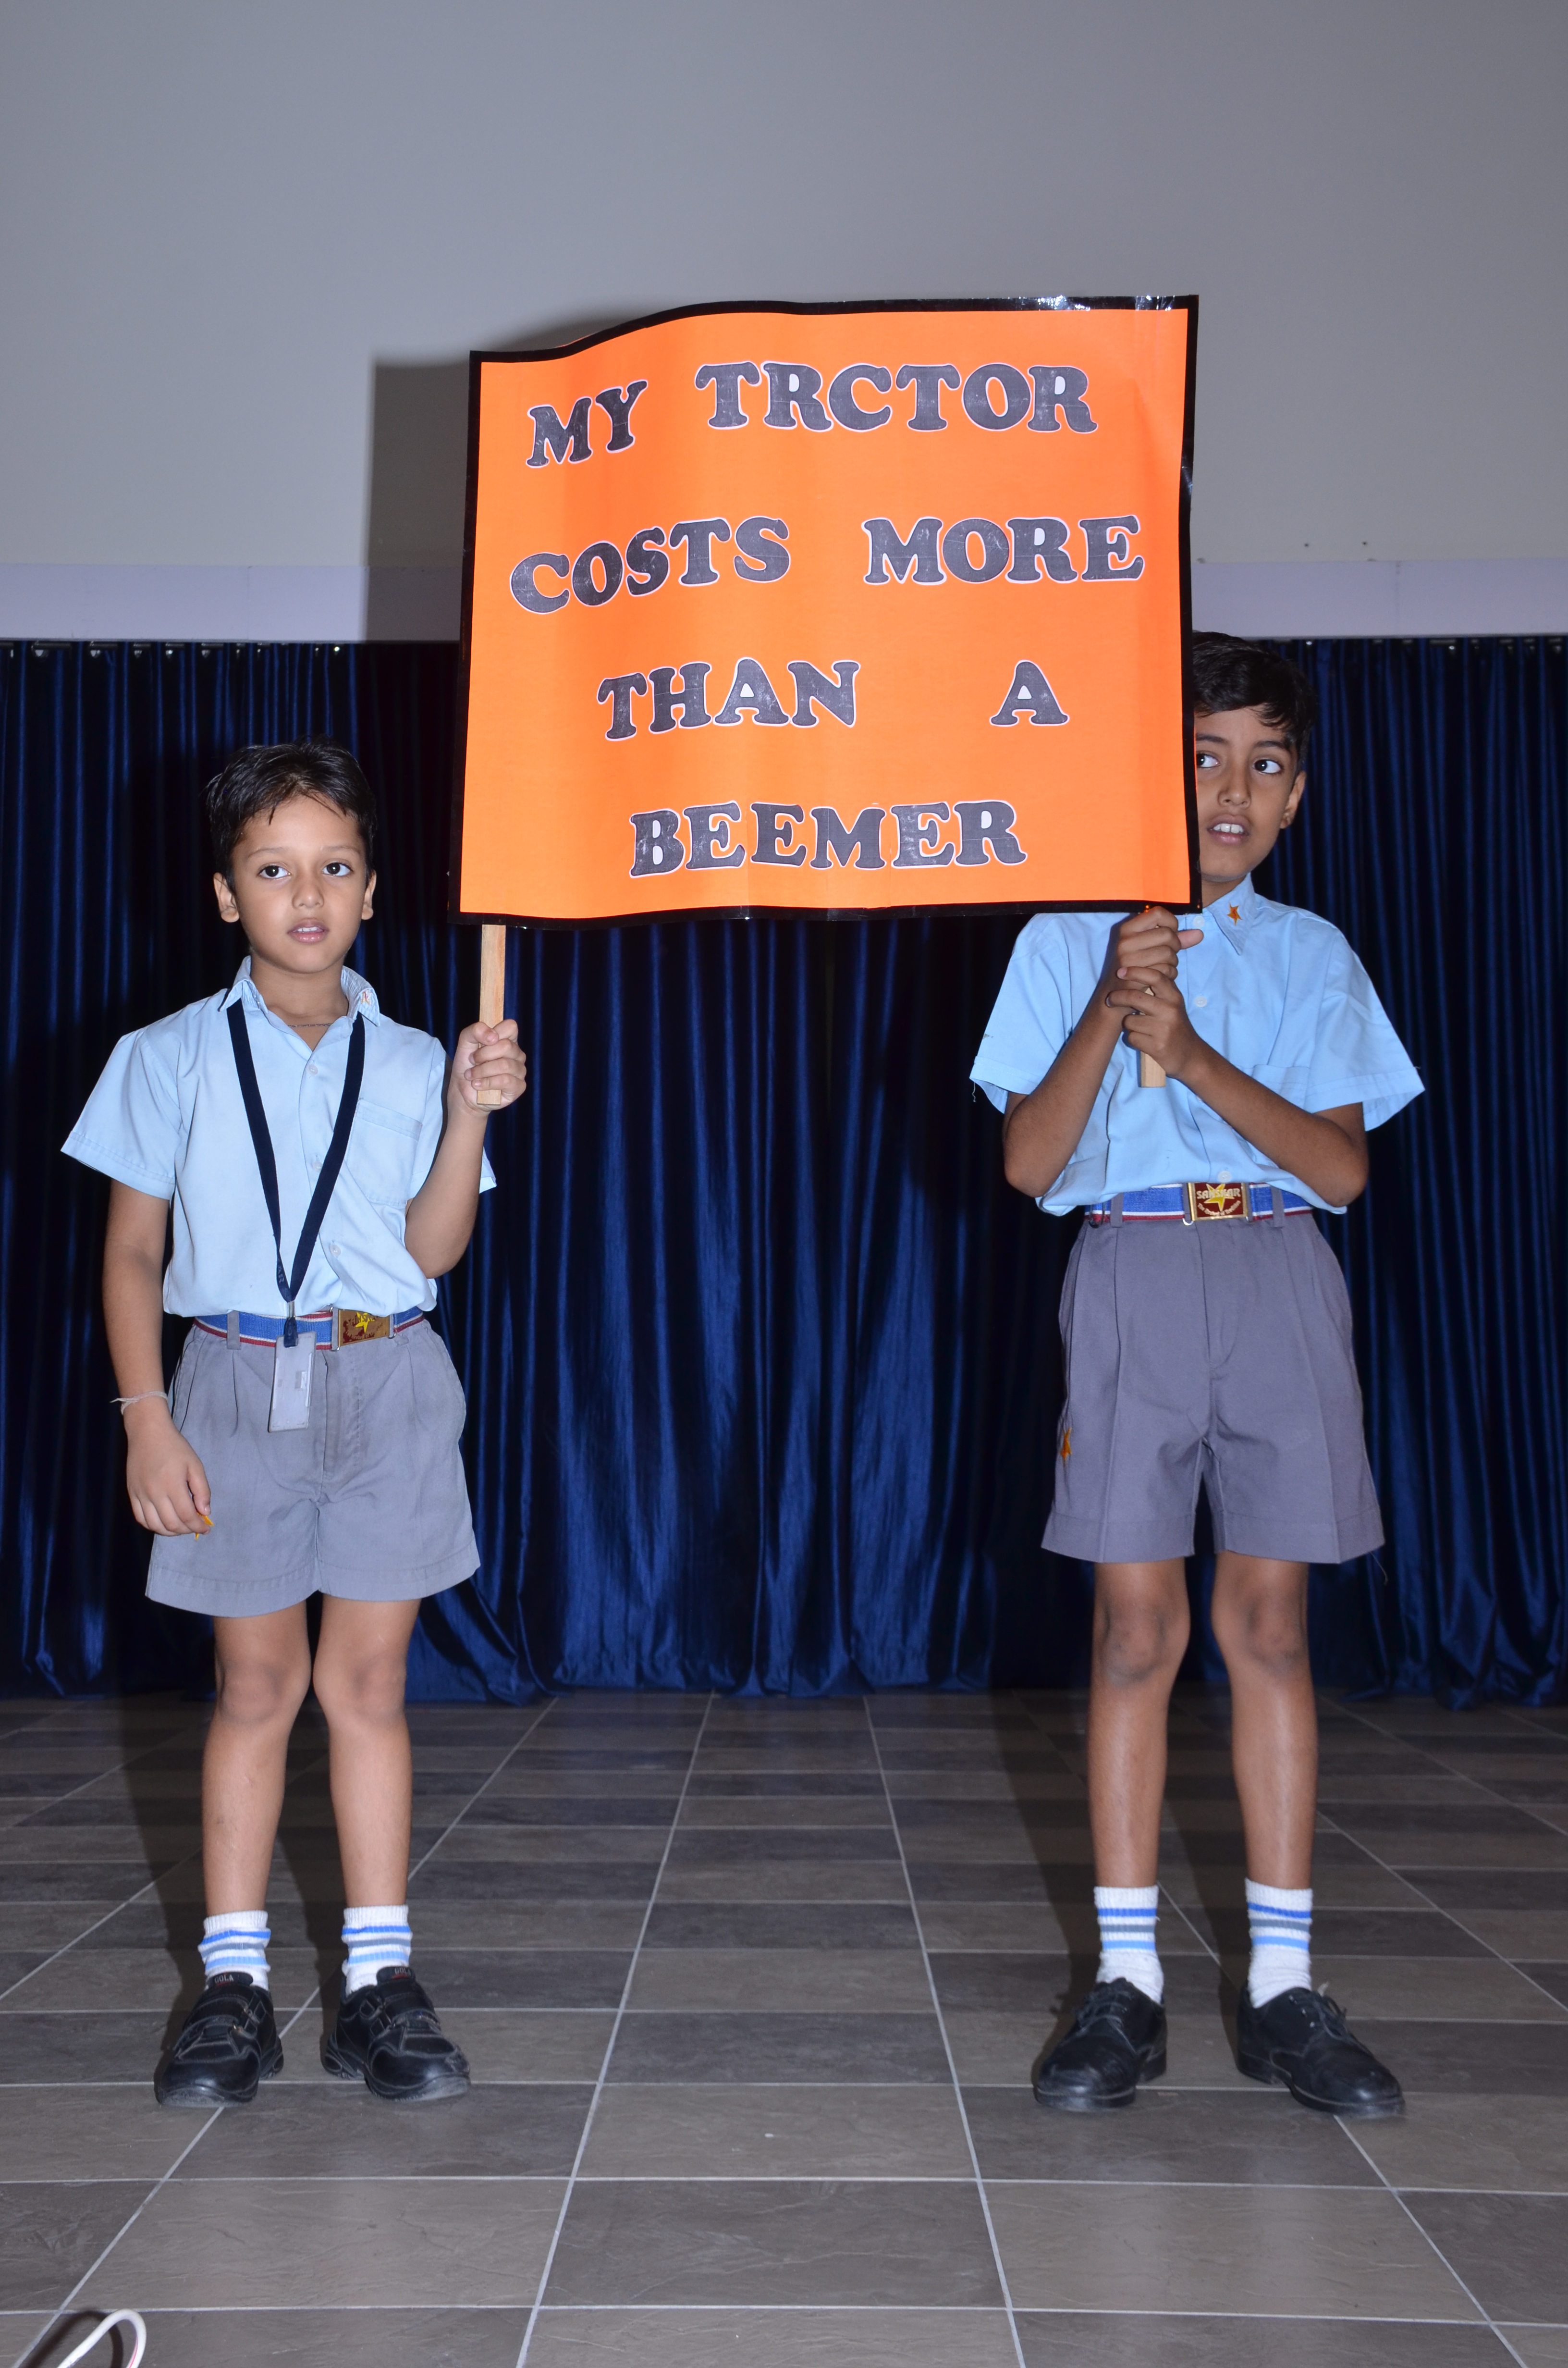 Grade II ‘Techno-word’ class show held at Sanskar School